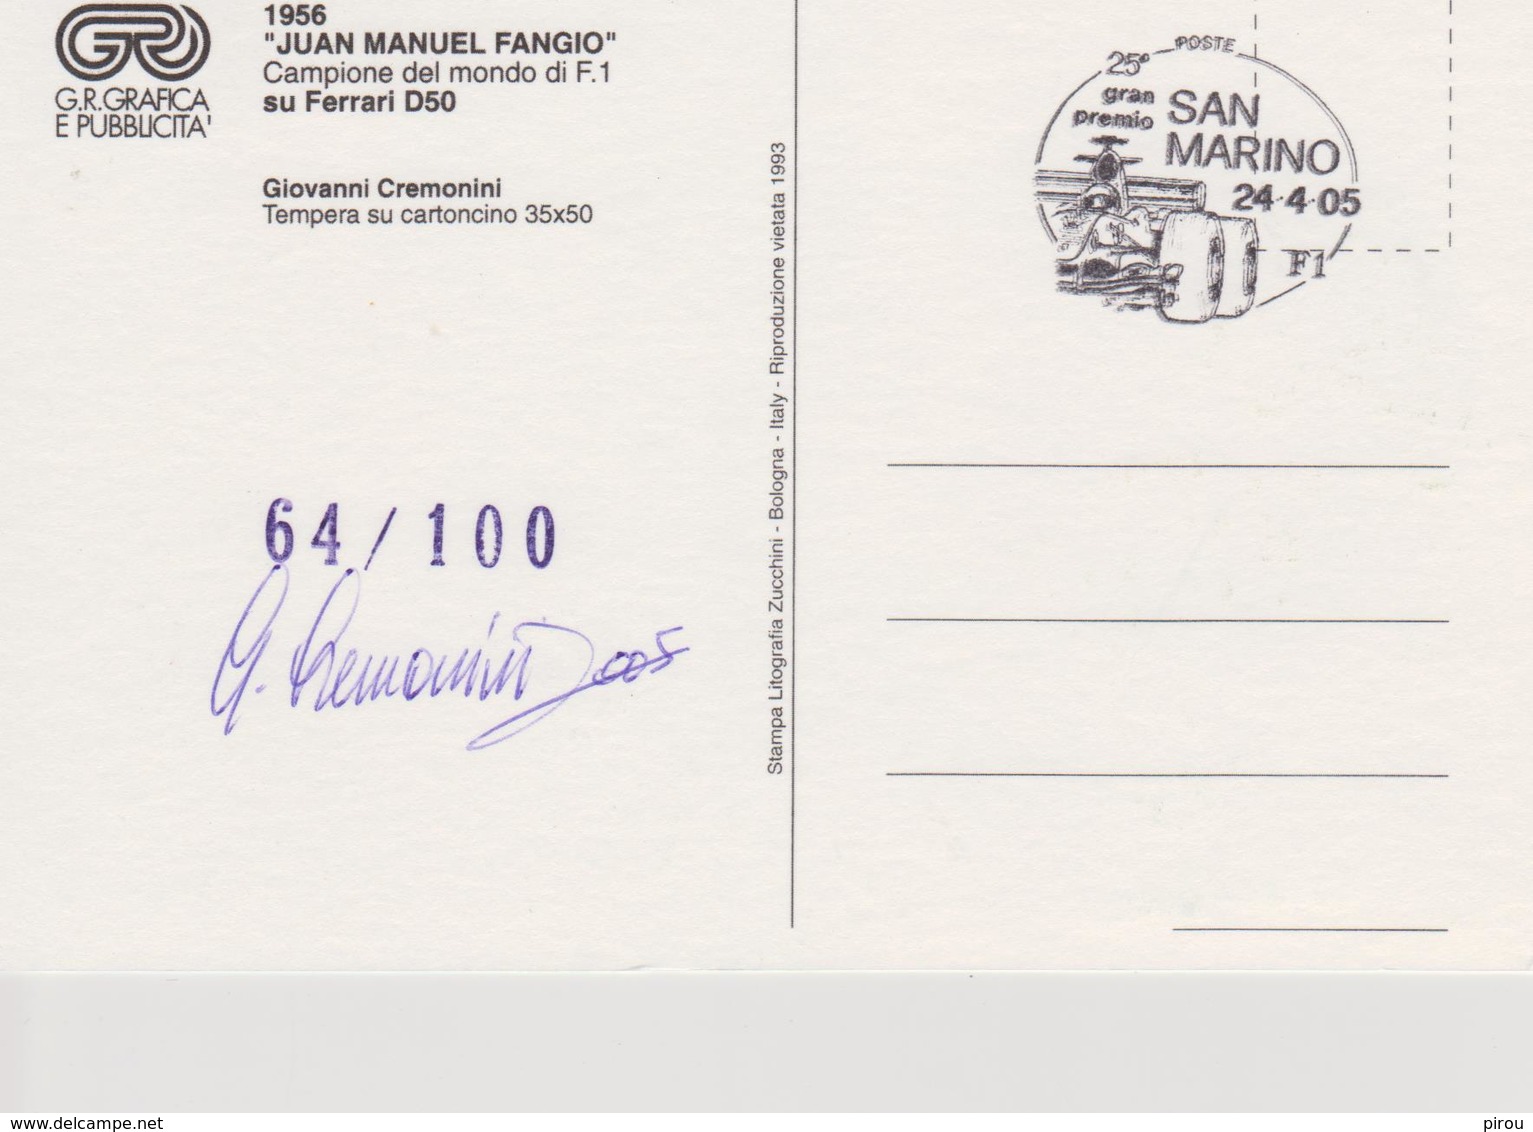 SAN MARINO : FERRARI JUAN MANUEL FANGIO CHAMPION DU MONDE 1956 ( G.CREMONINI Signée De L'auteur) - Automobile